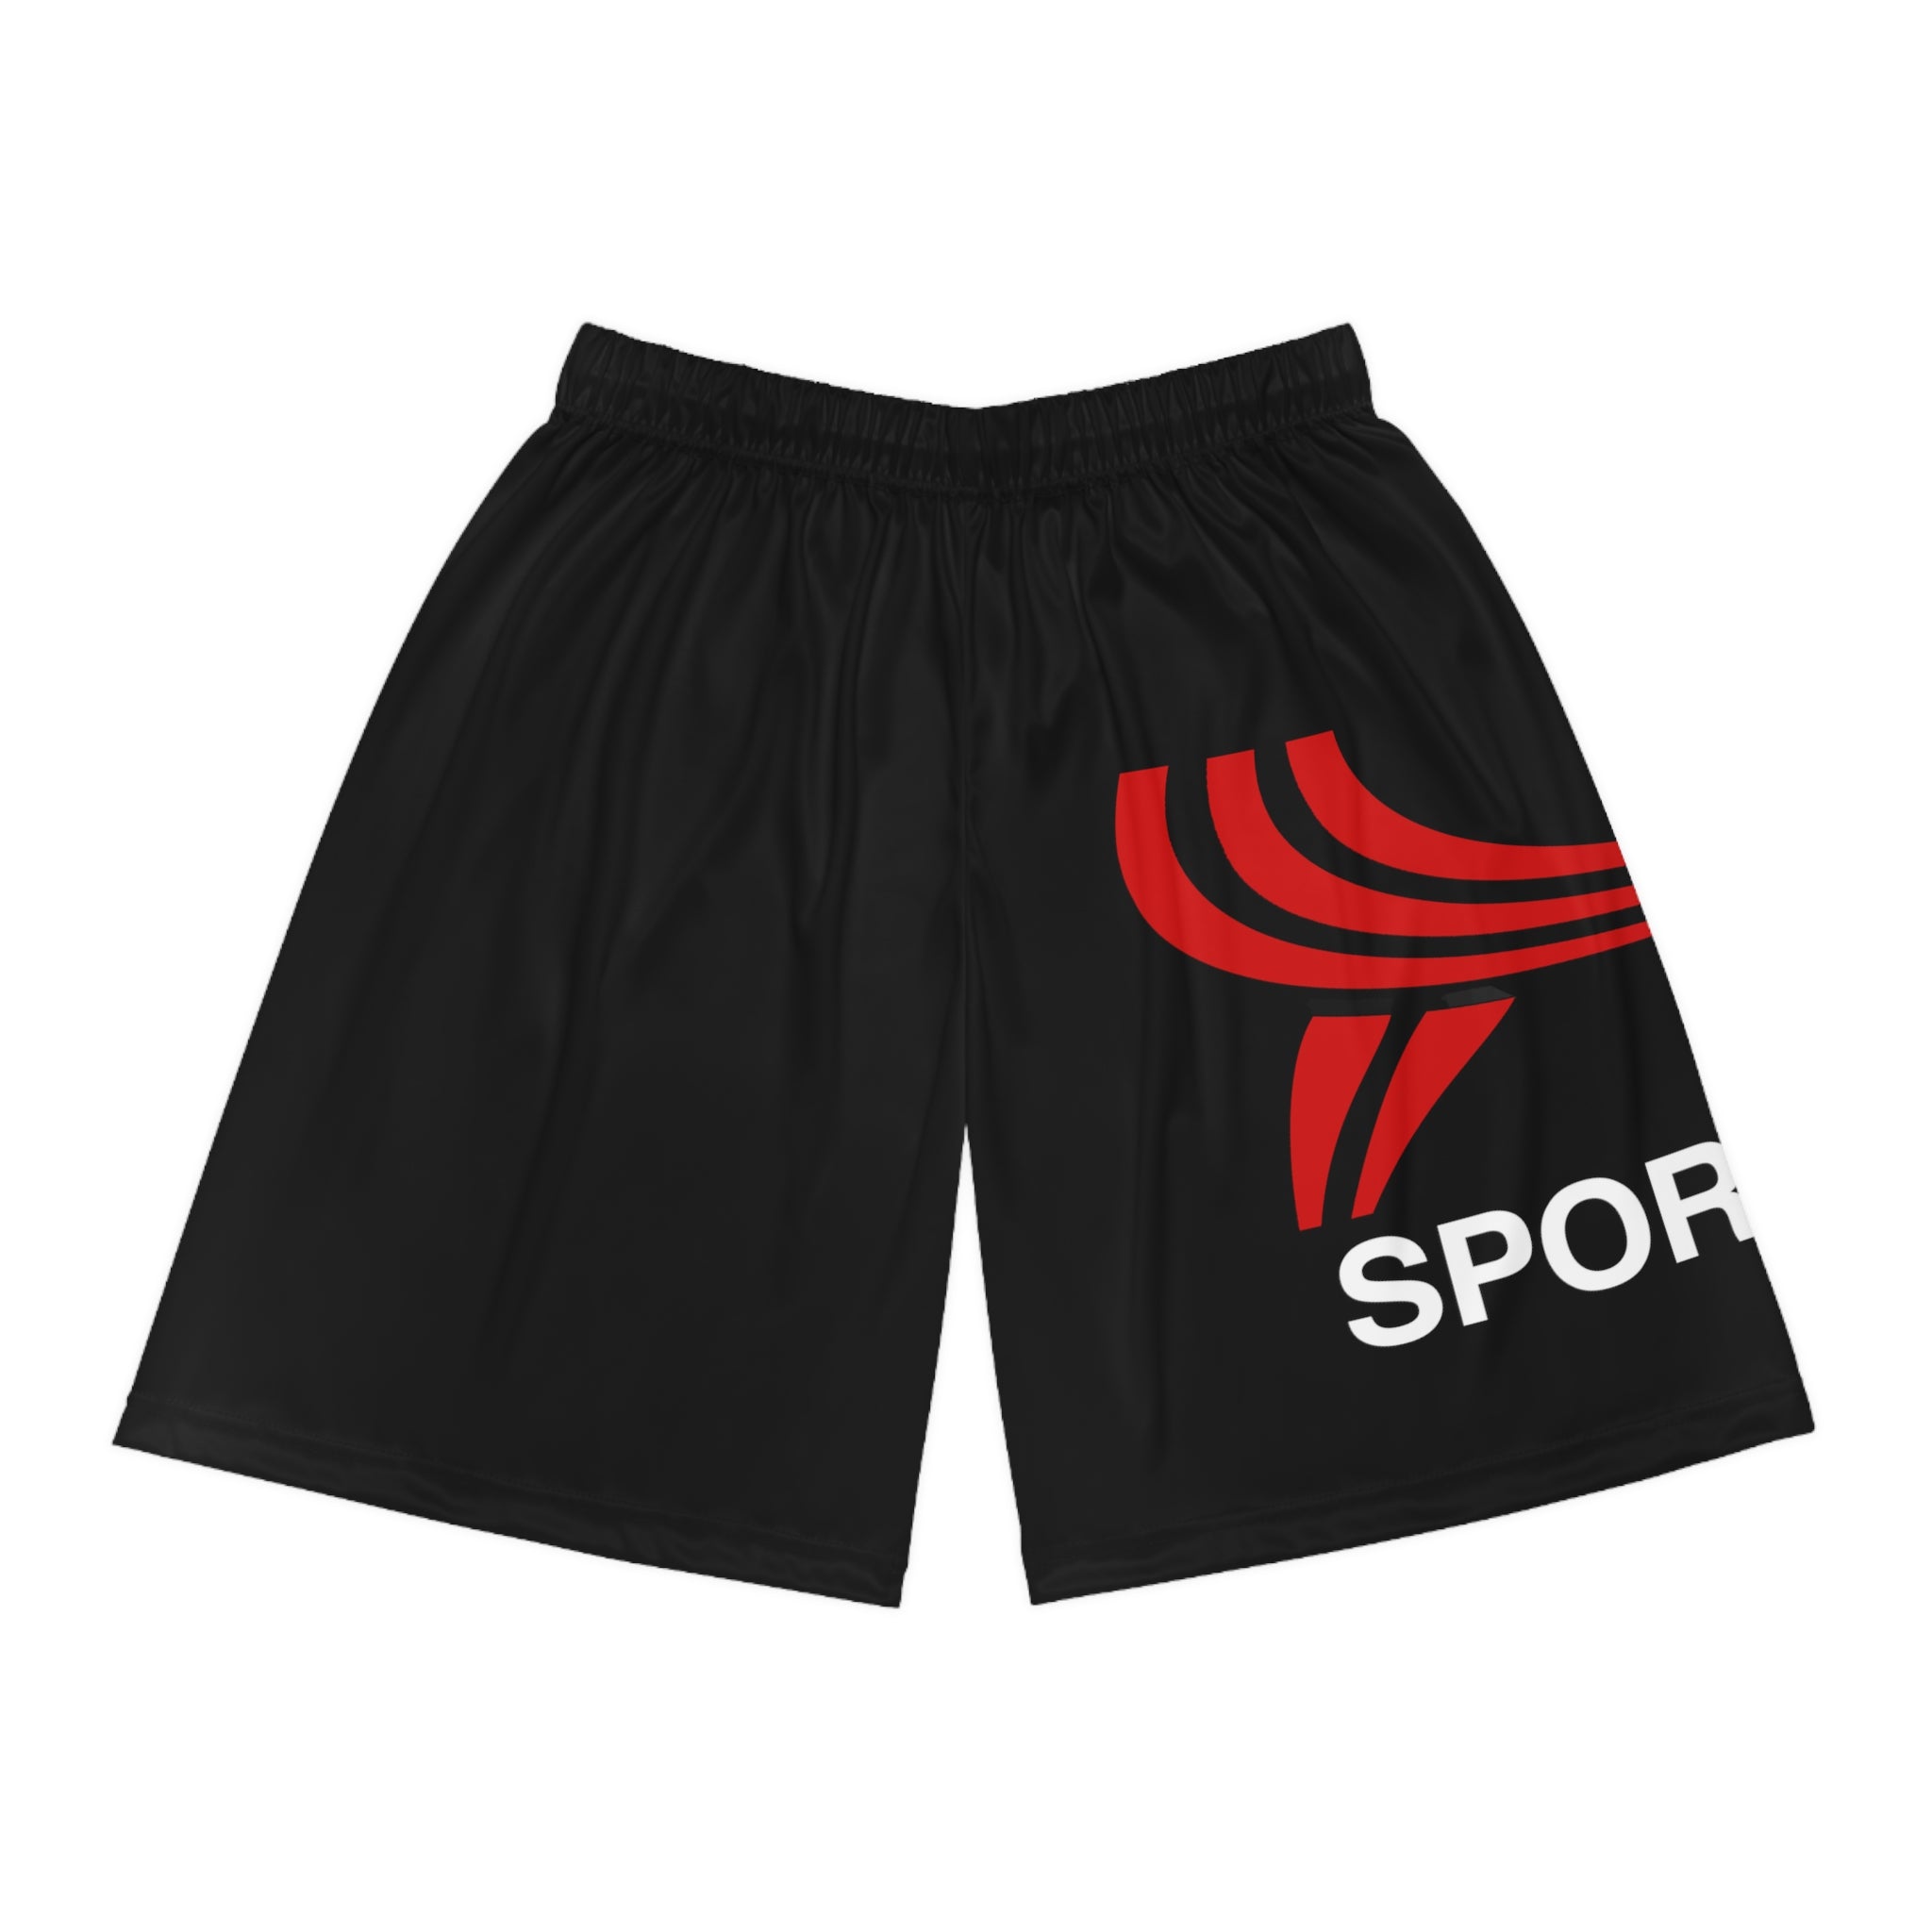 Product Image of RED SPORT LOGO Black Basketball Shorts #1